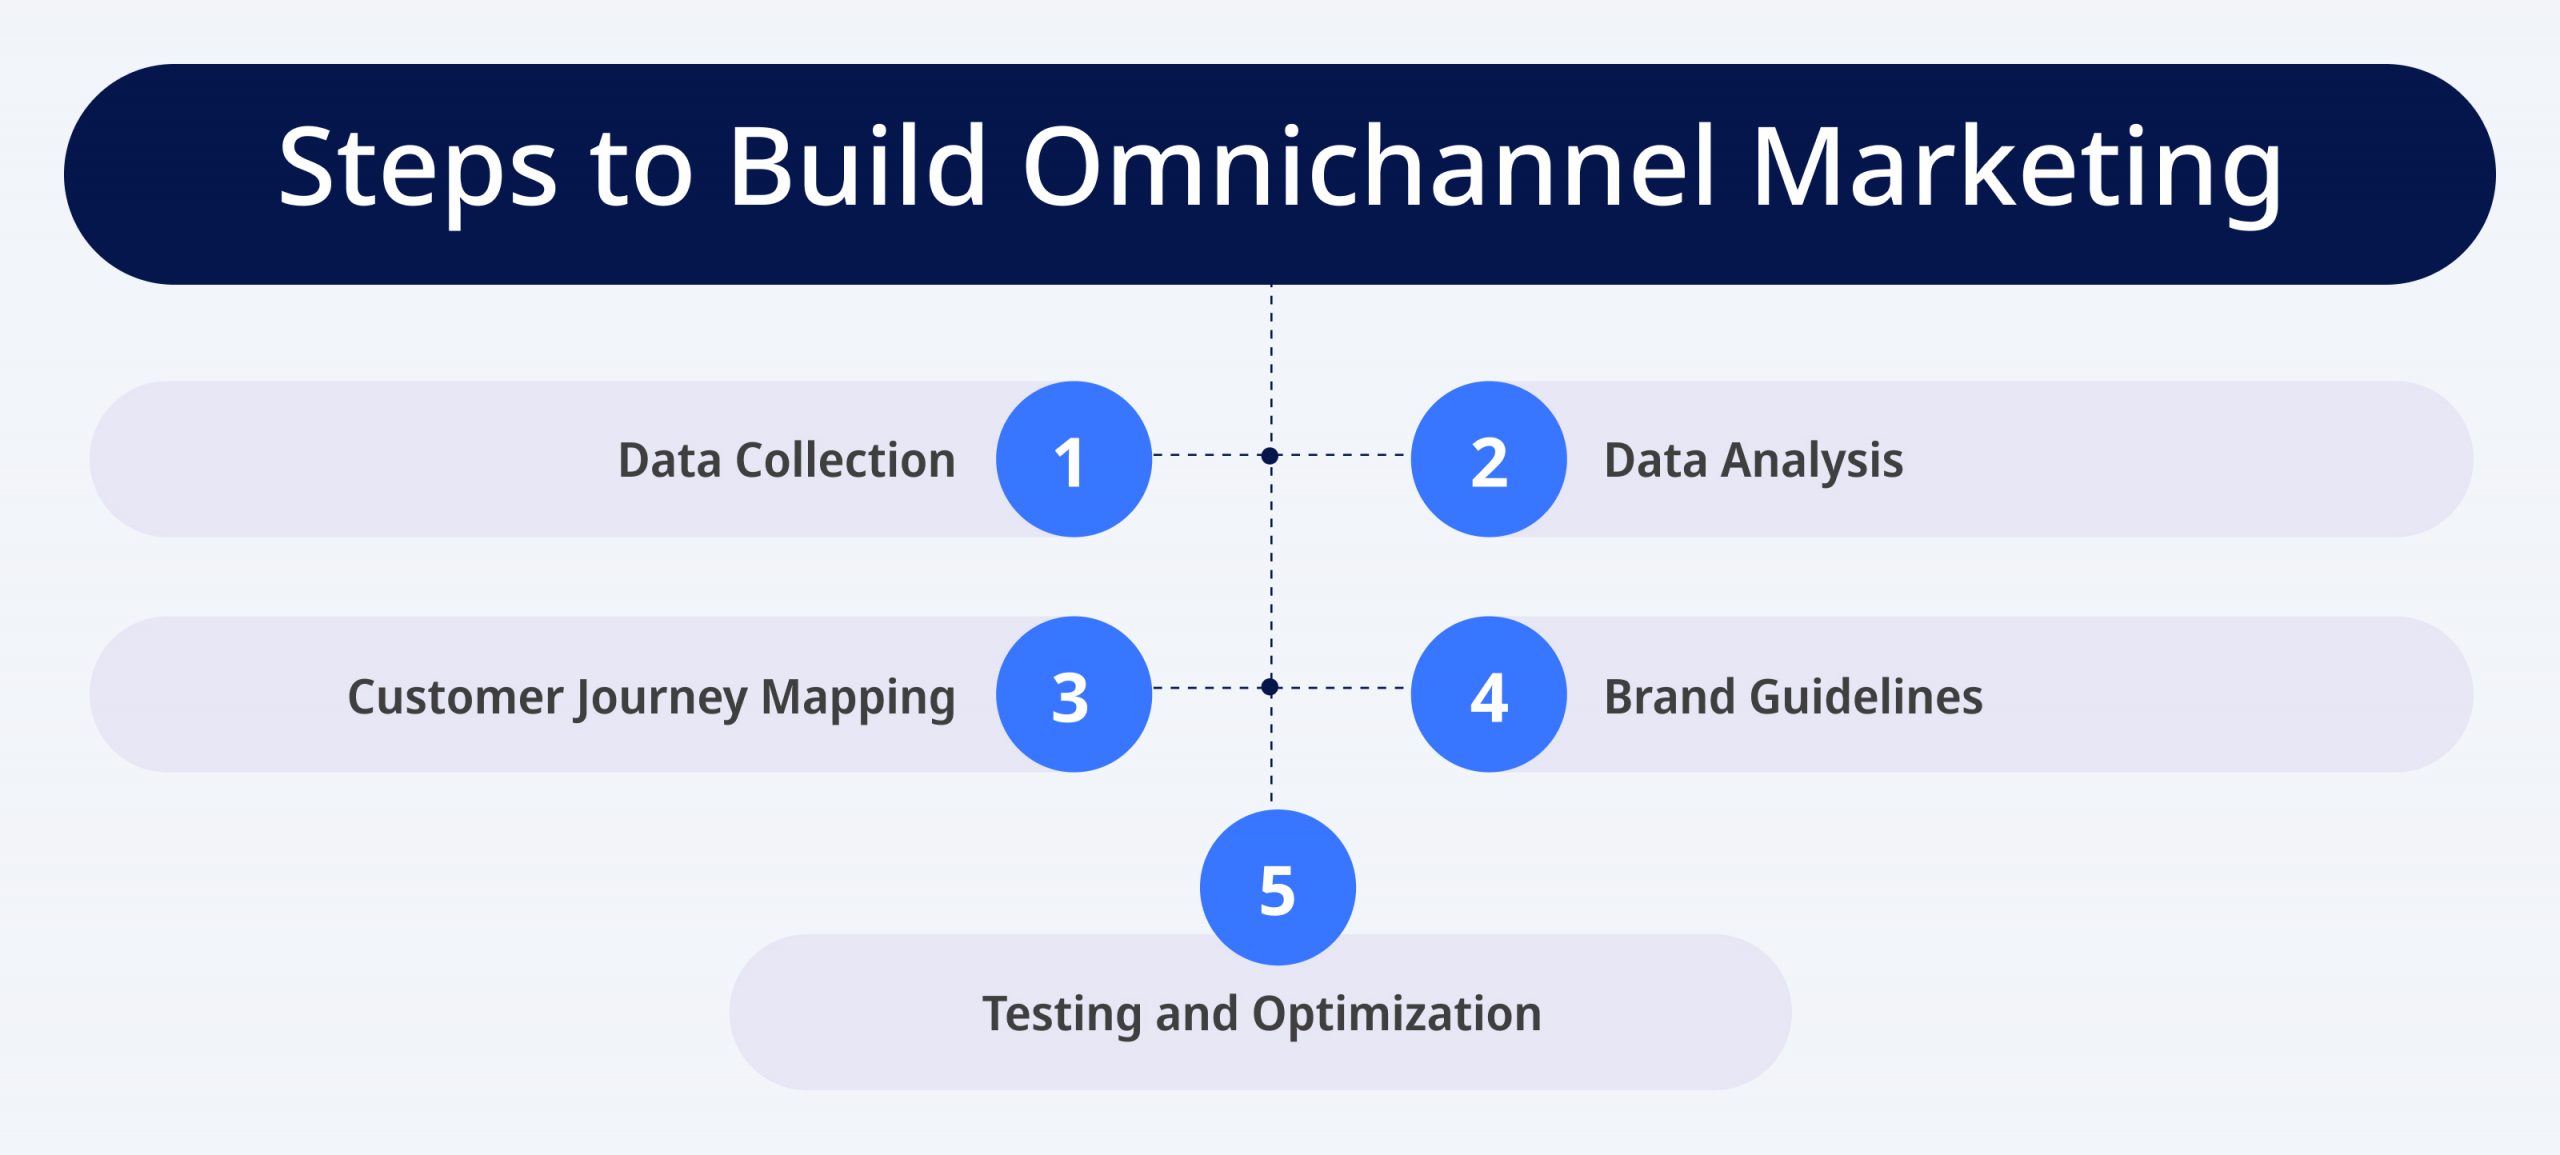 Steps to Build Omnichannel Marketing